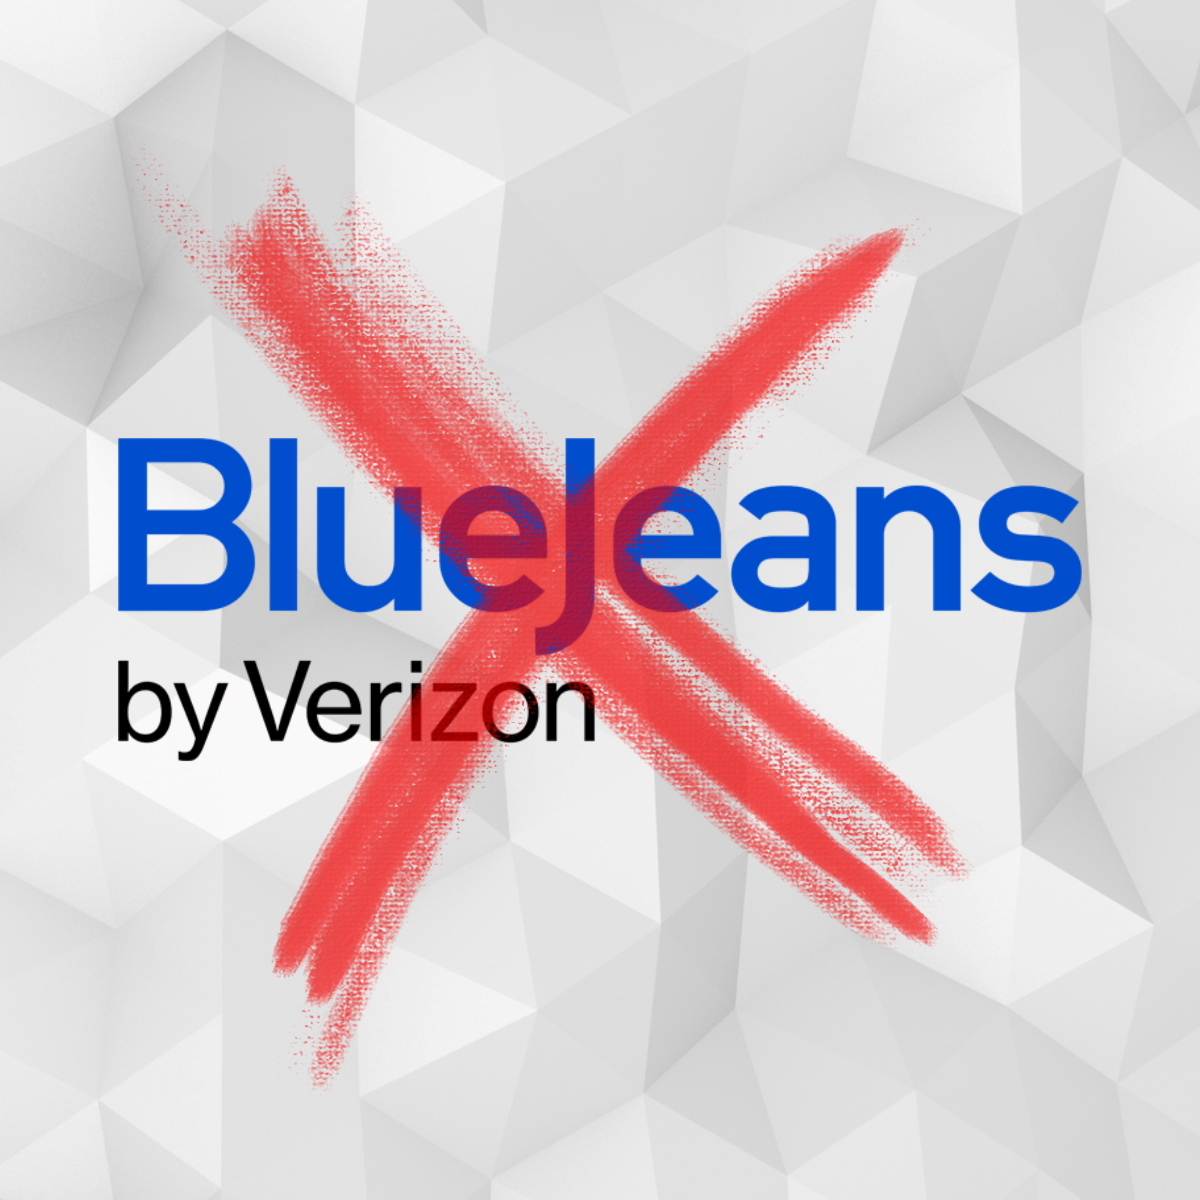 Bluejeans verizon logo with an x through it